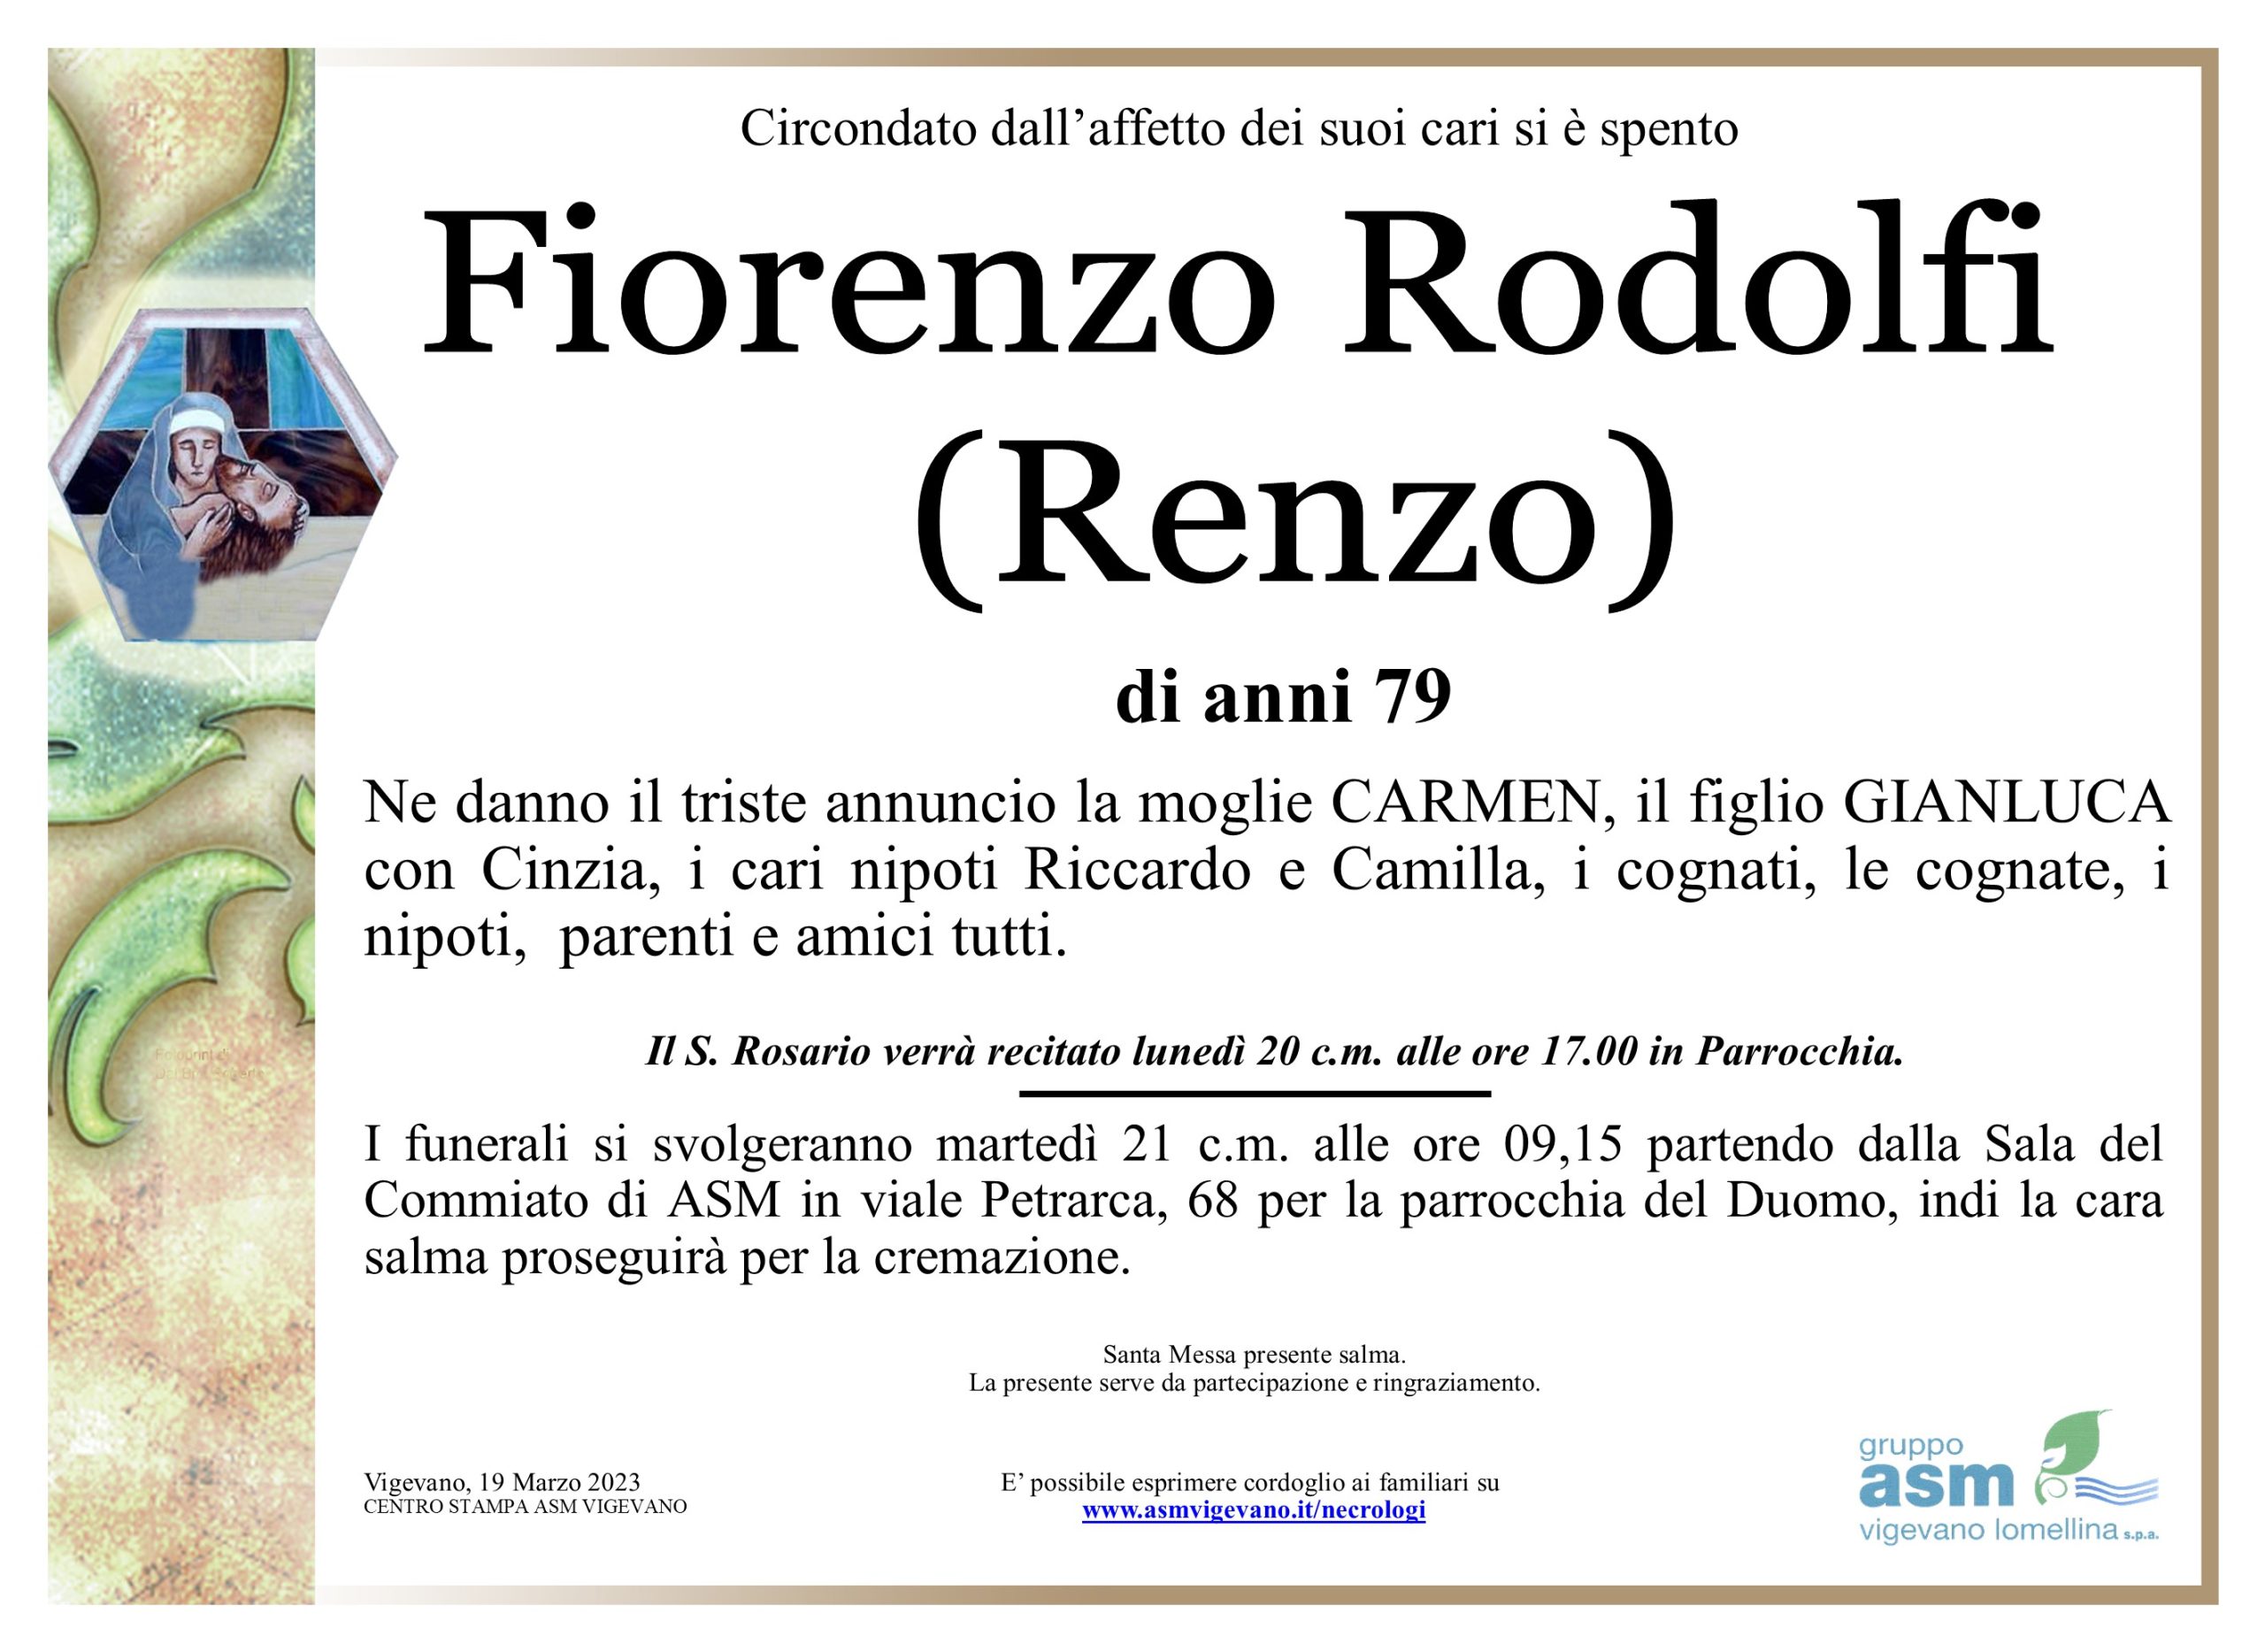 Fiorenzo Rodolfi